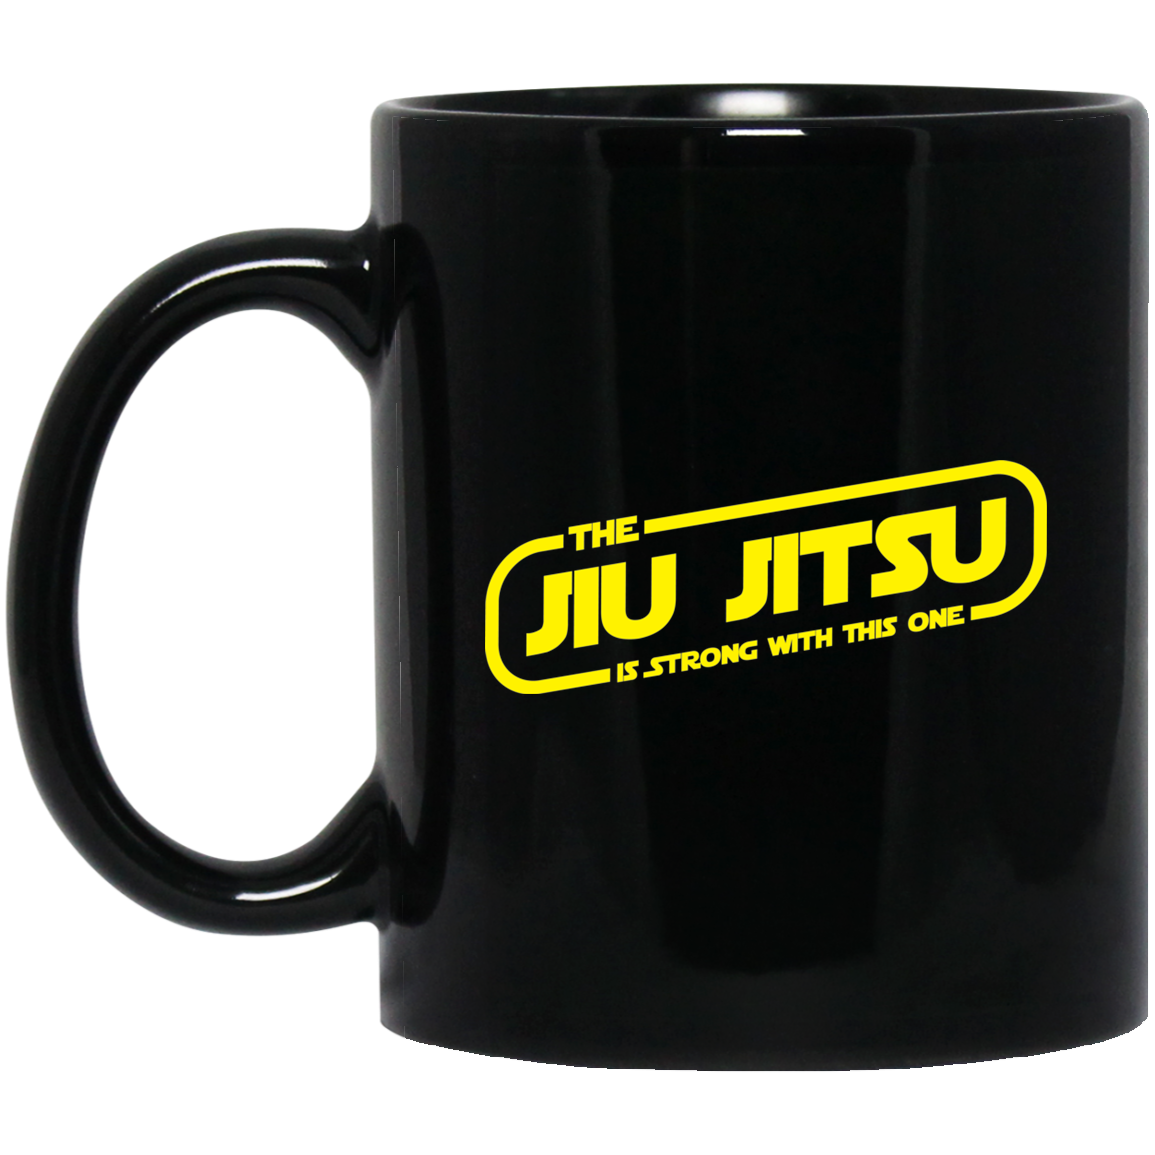 Brazilian Jiu-Jitsu BJJ Brazilian Jiu Jitsu Coffee Mug